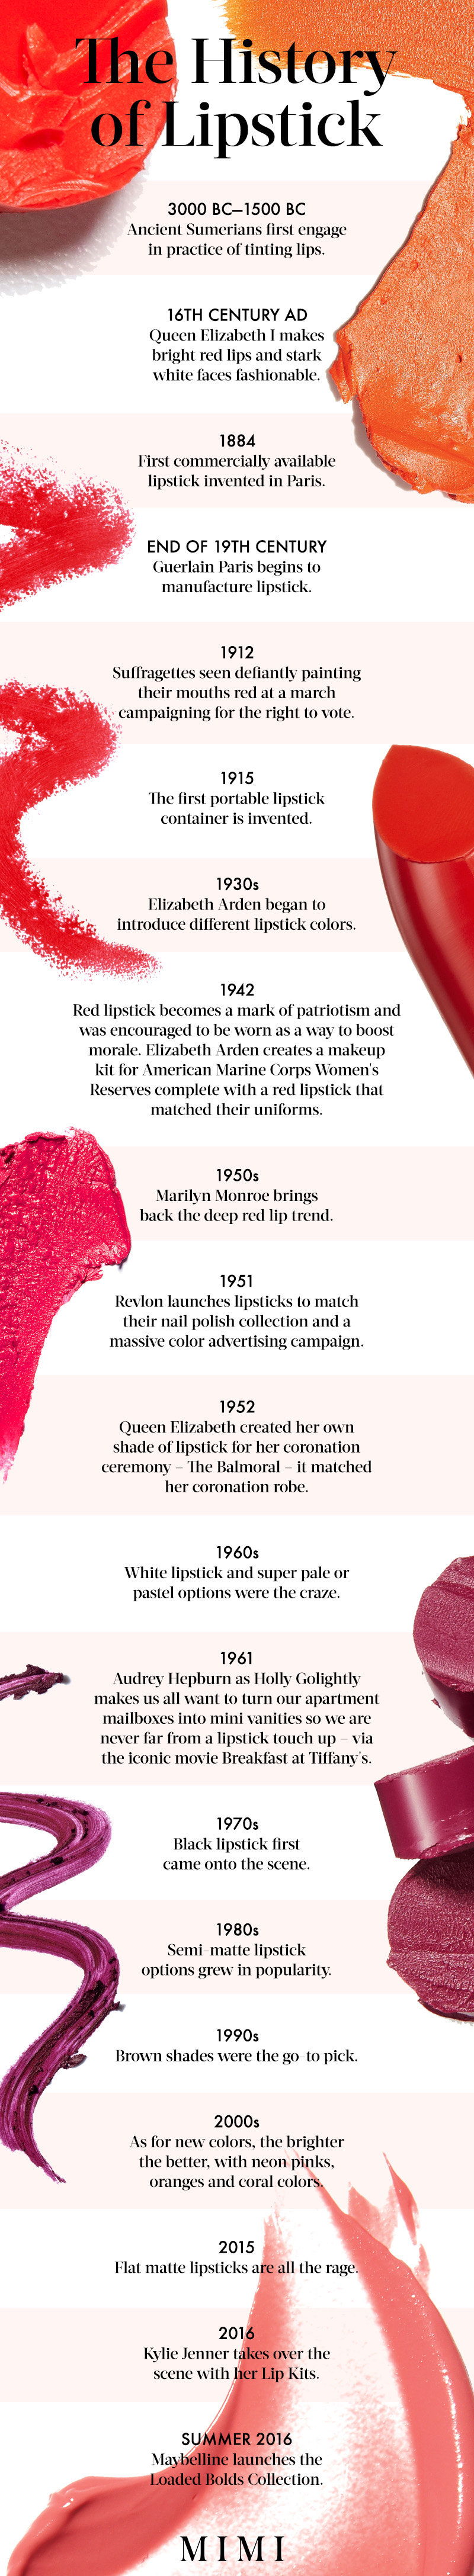 MIMI: History of Lipstick REVISE